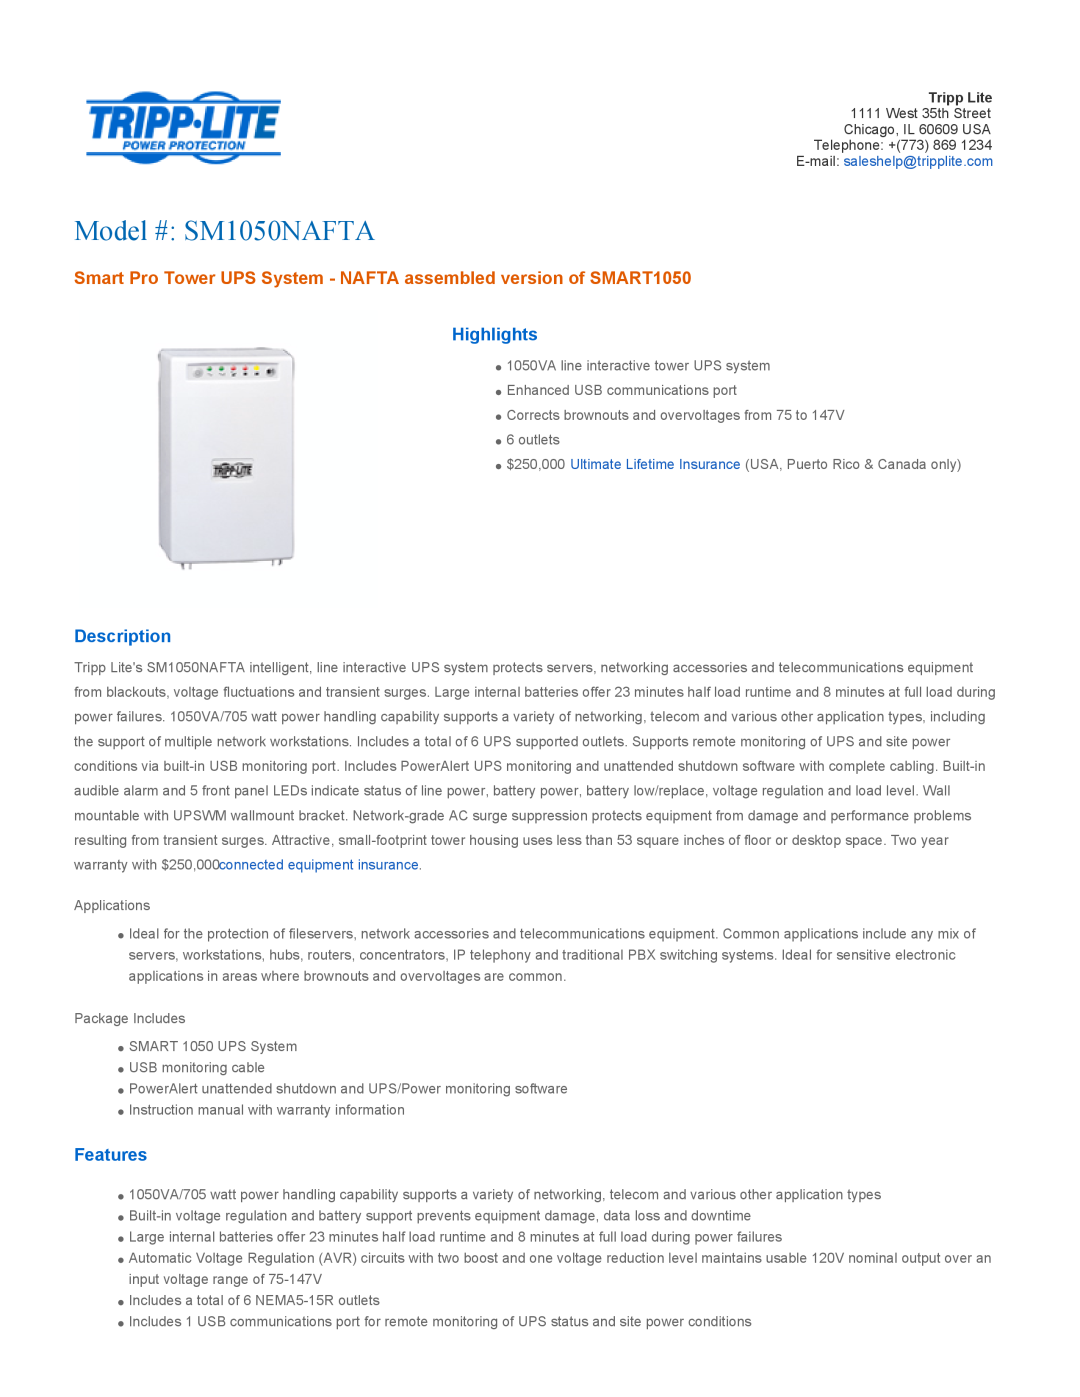 Tripp Lite SM1050NAFTA warranty Highlights, Description, Features, warranty with $250,000connected equipment insurance 